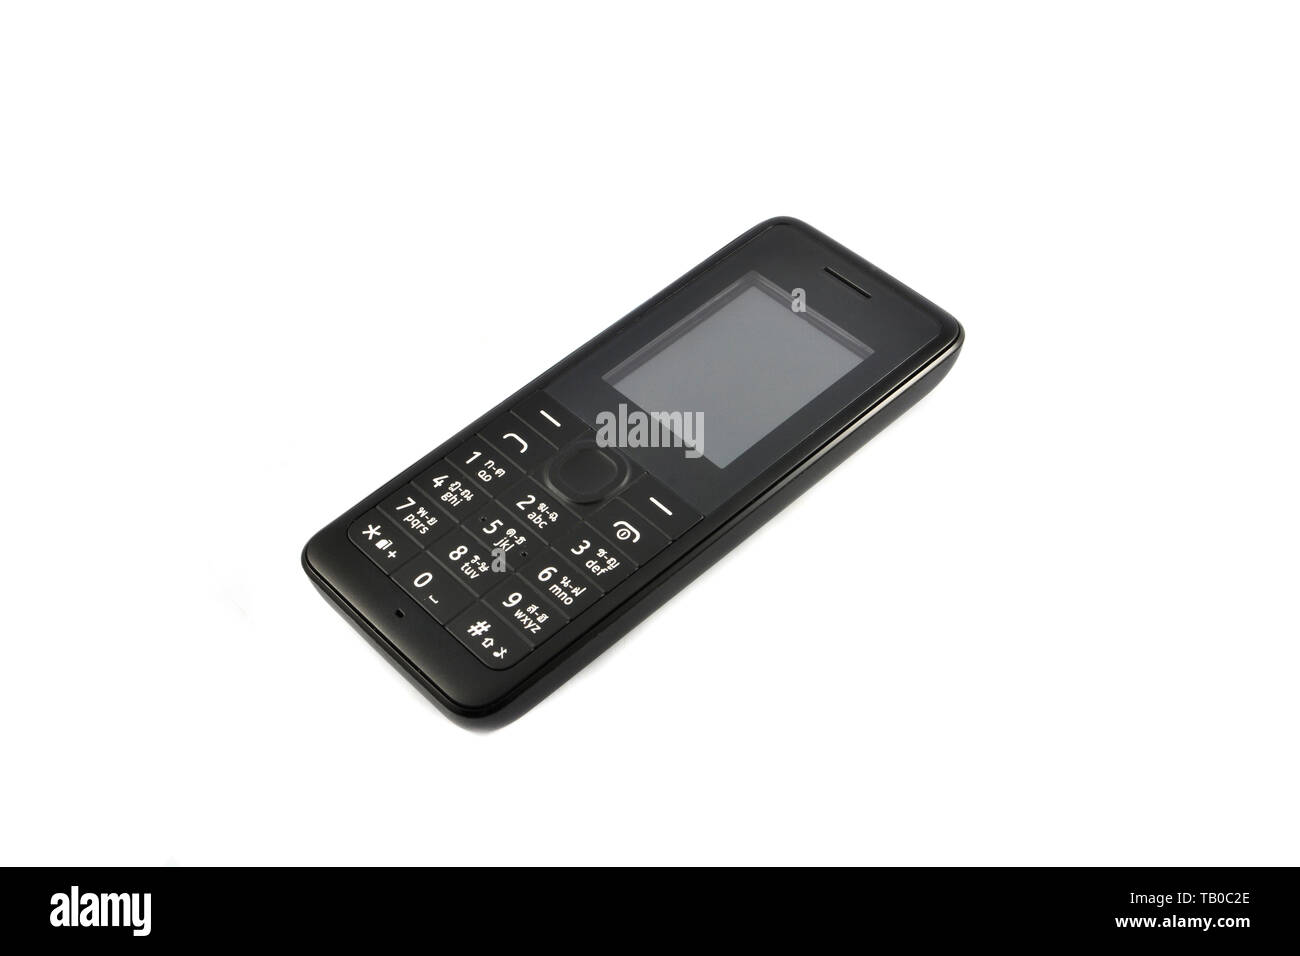 Black telephone / Old model mobile phone isolated on white background Stock Photo